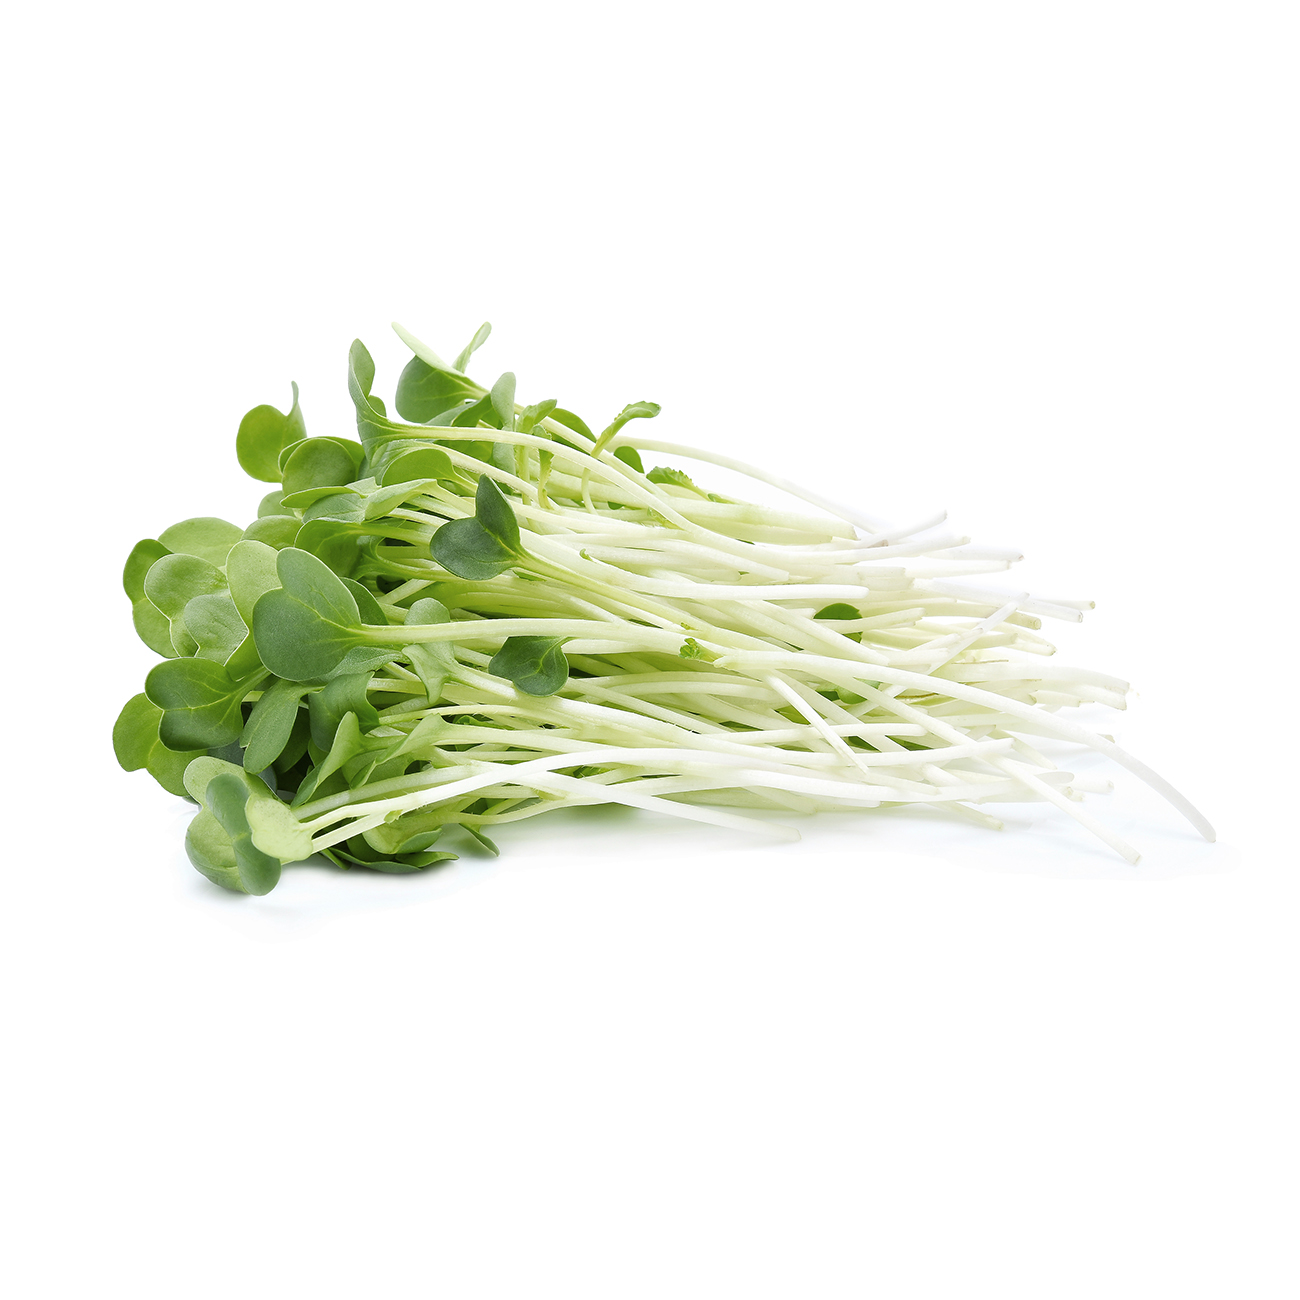 Sprouts, alfalfa